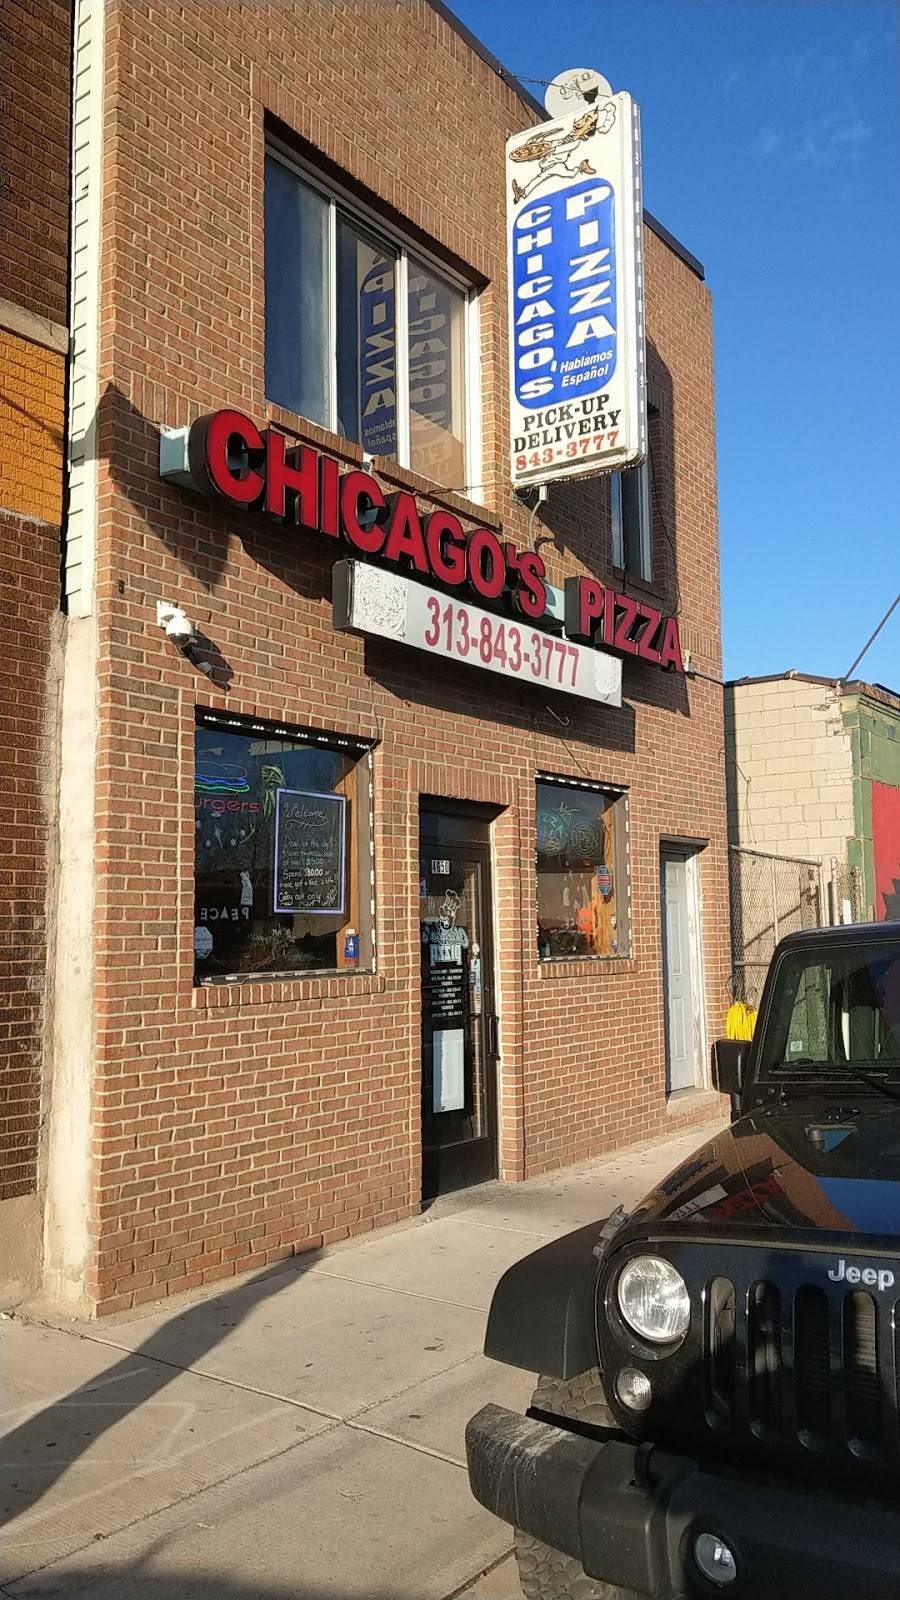 Chicagos Pizza | 4650 Vernor Hwy, Detroit, MI 48209 | Phone: (313) 843-3777